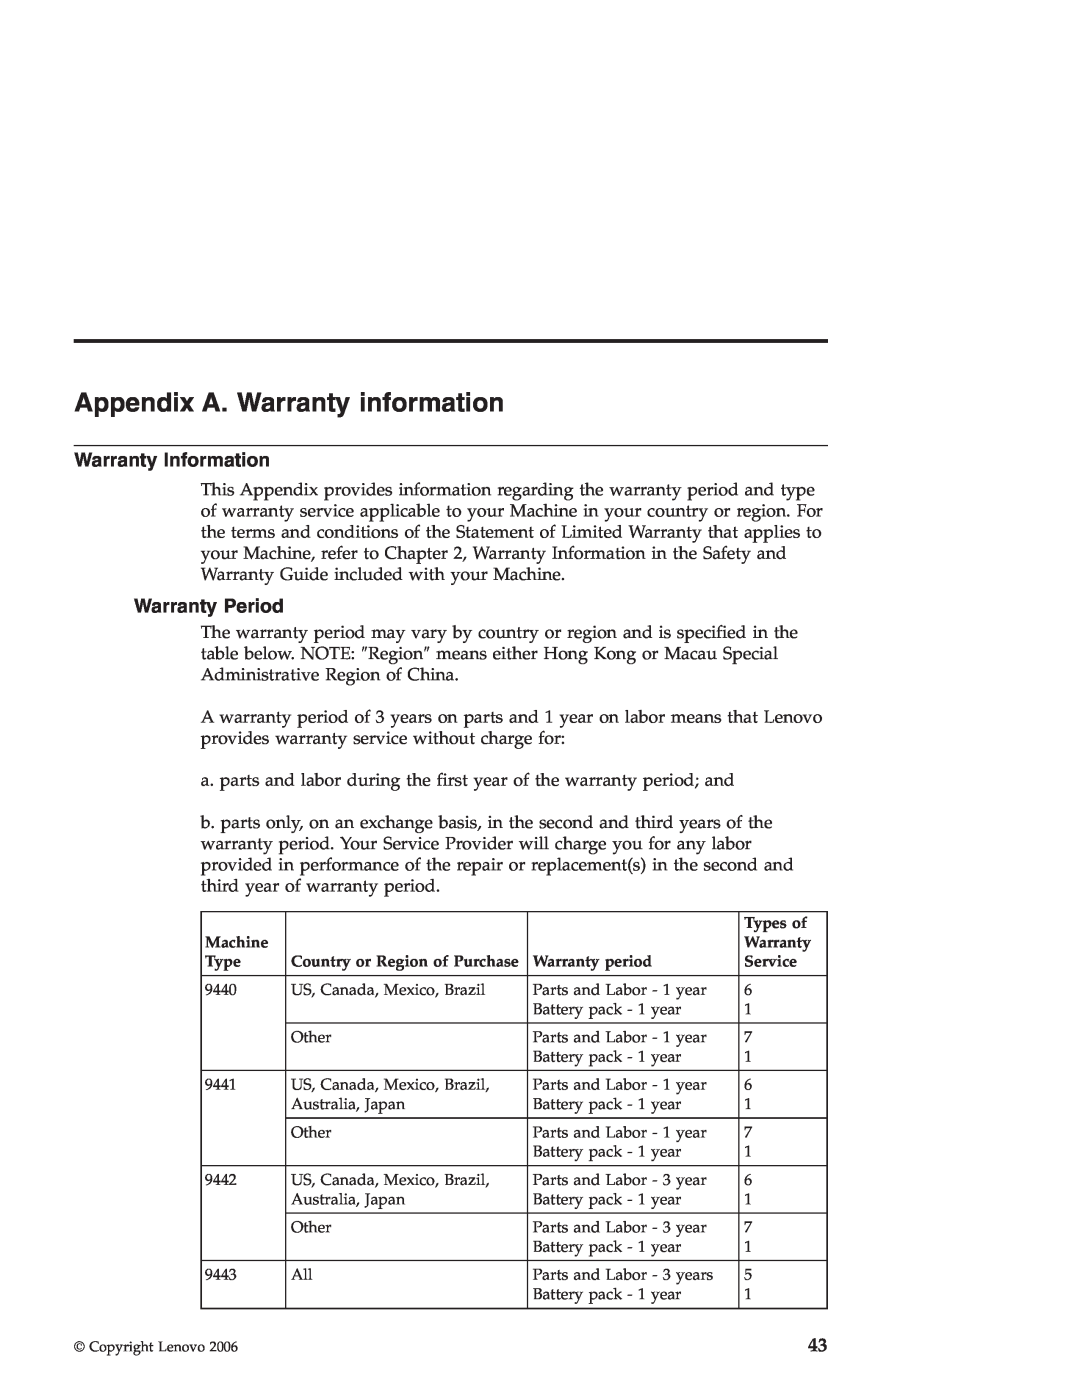 Lenovo Z61t, Z61e, Z61m warranty Appendix A. Warranty information, Warranty Information, Warranty Period 